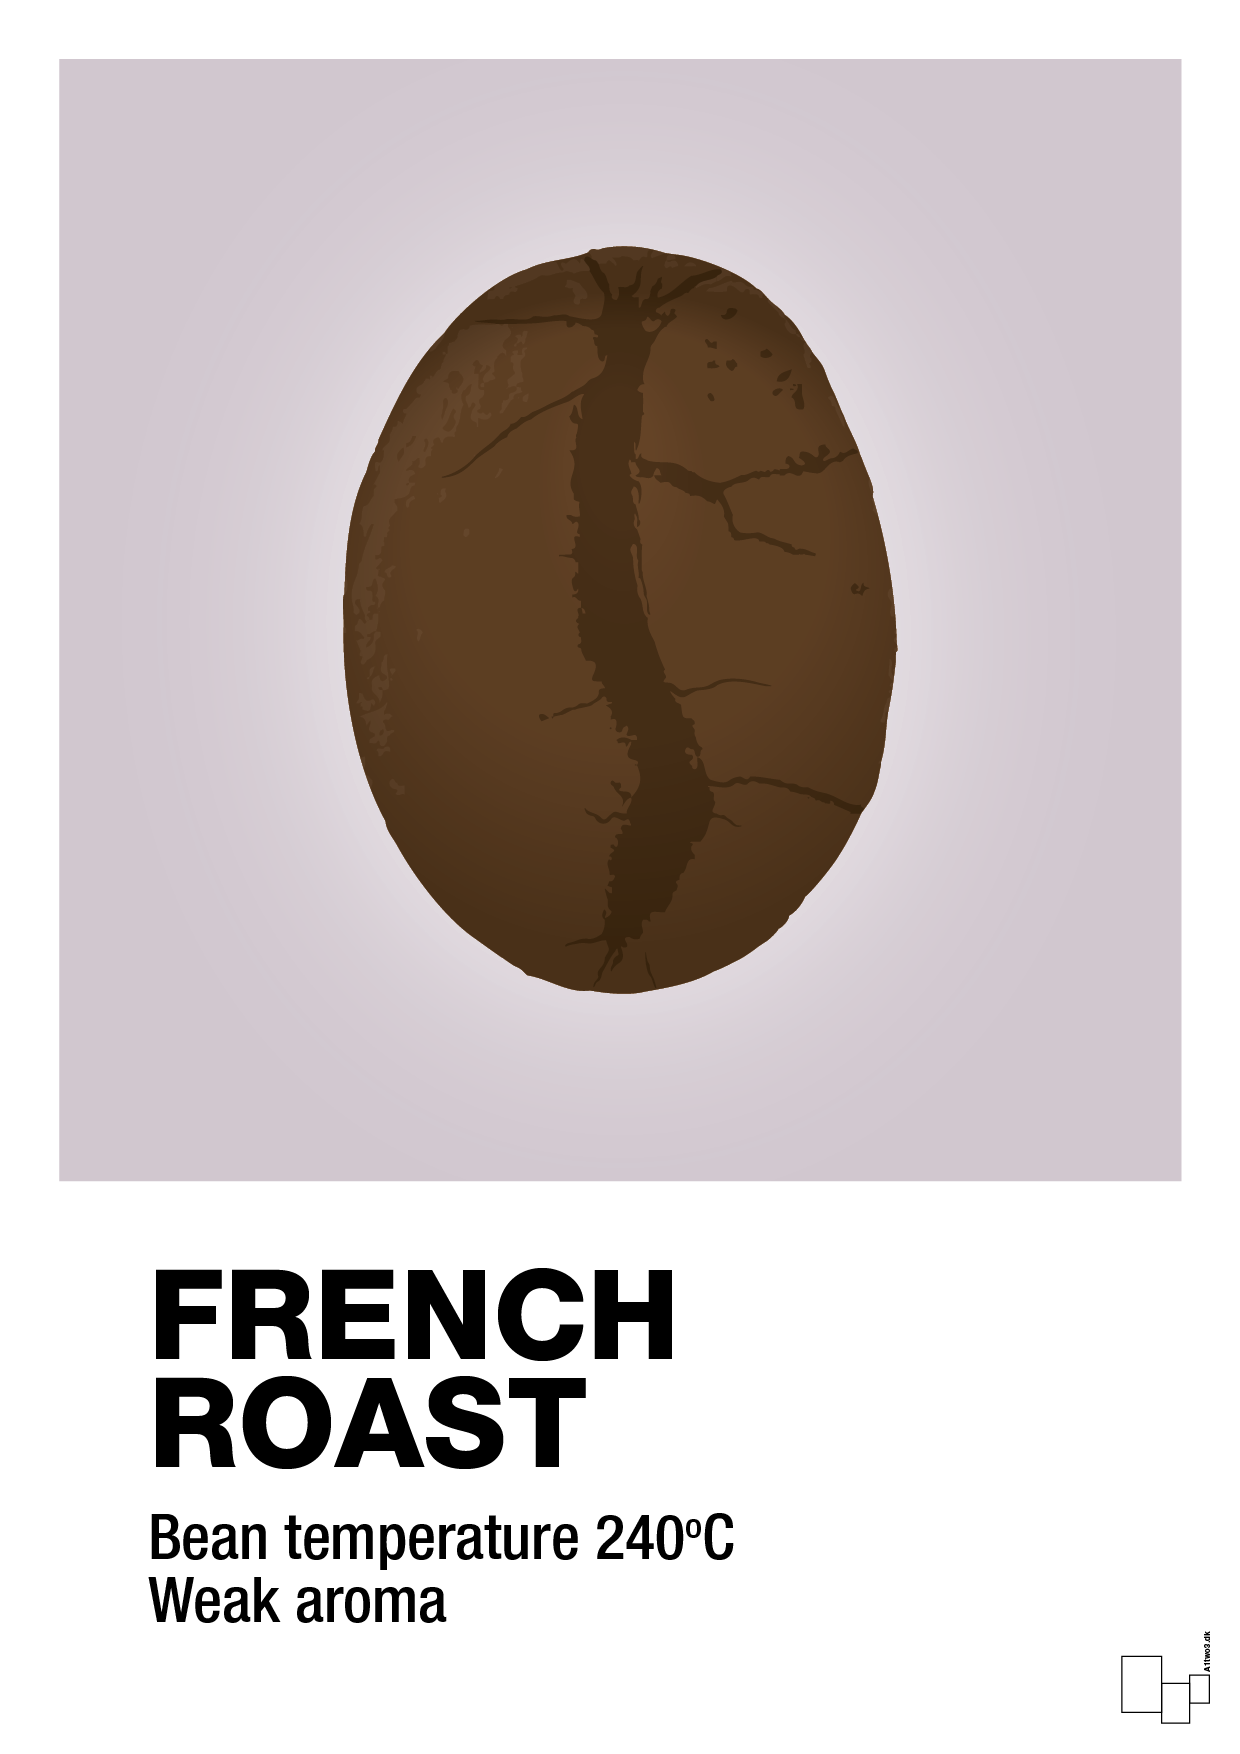 french roast - Plakat med Mad & Drikke i Dusty Lilac